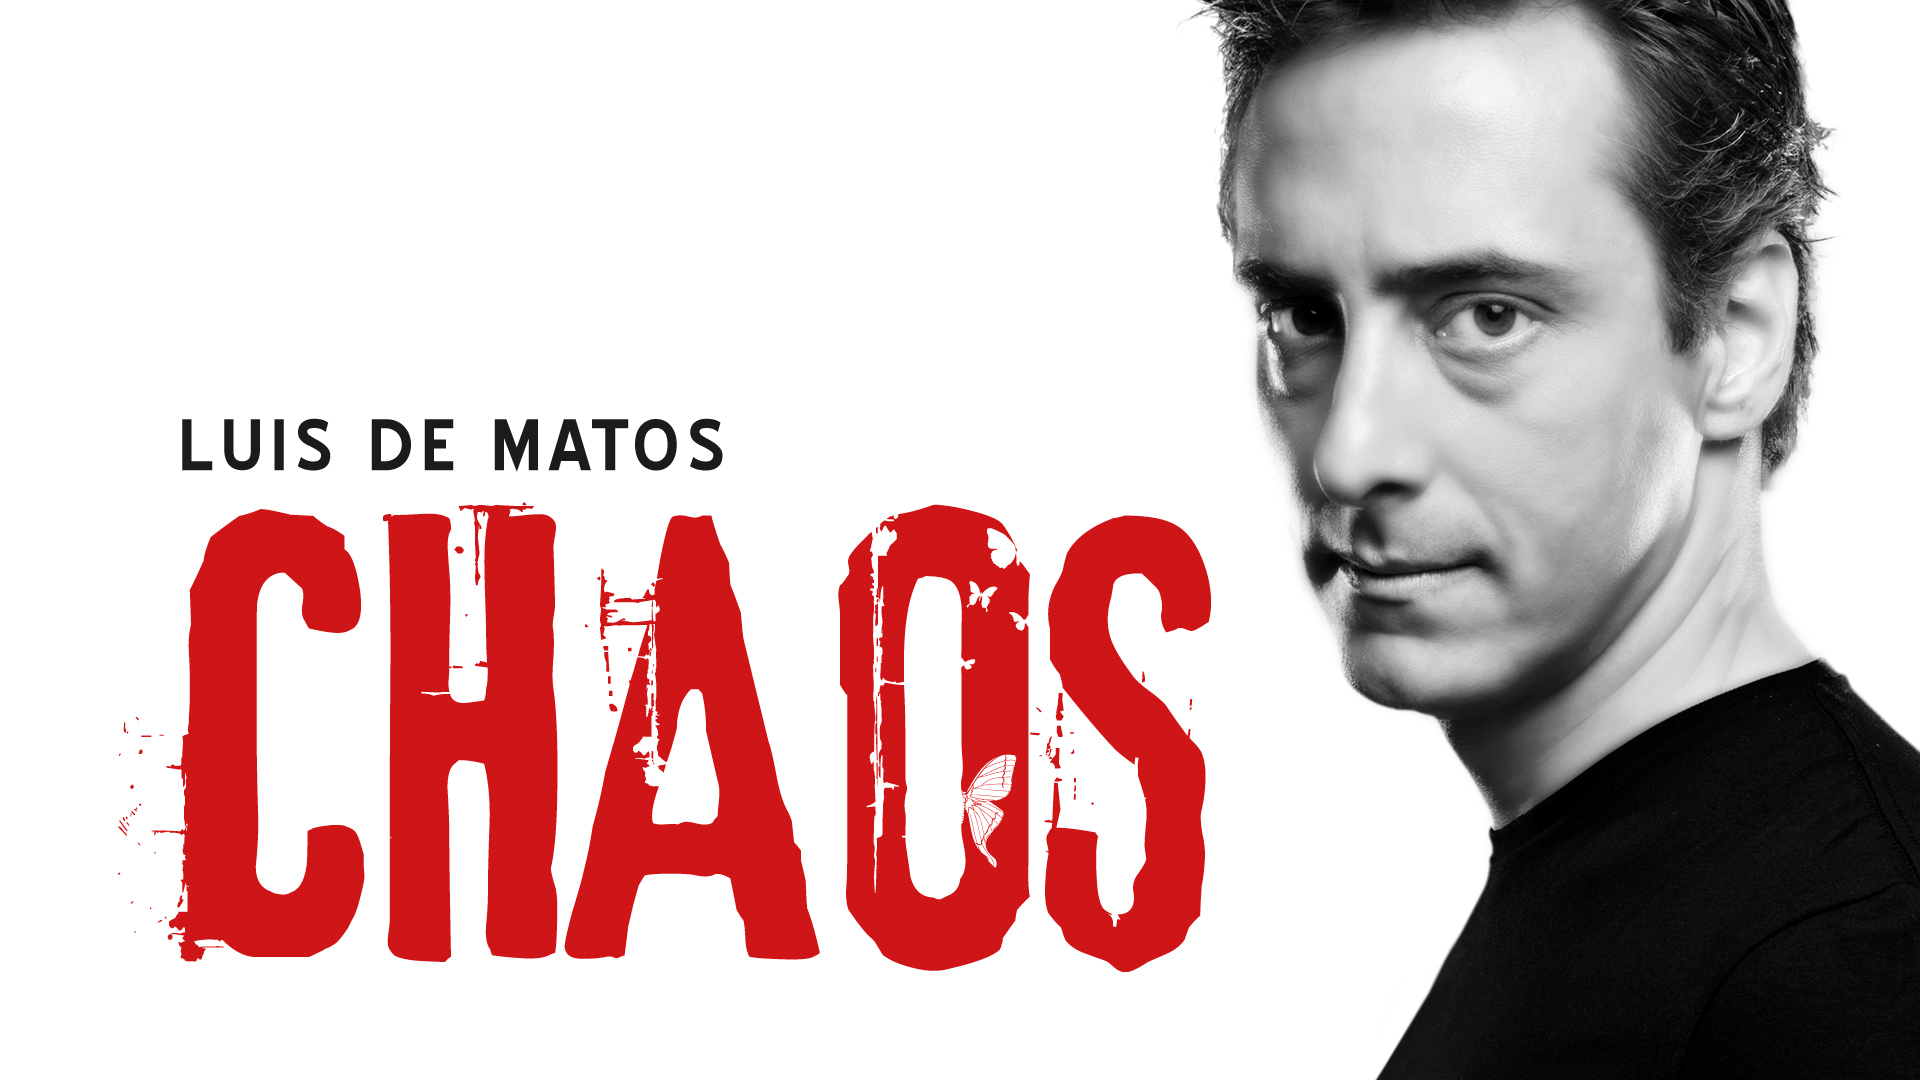 Luís de Matos apresenta “Chaos” no Casino Estoril